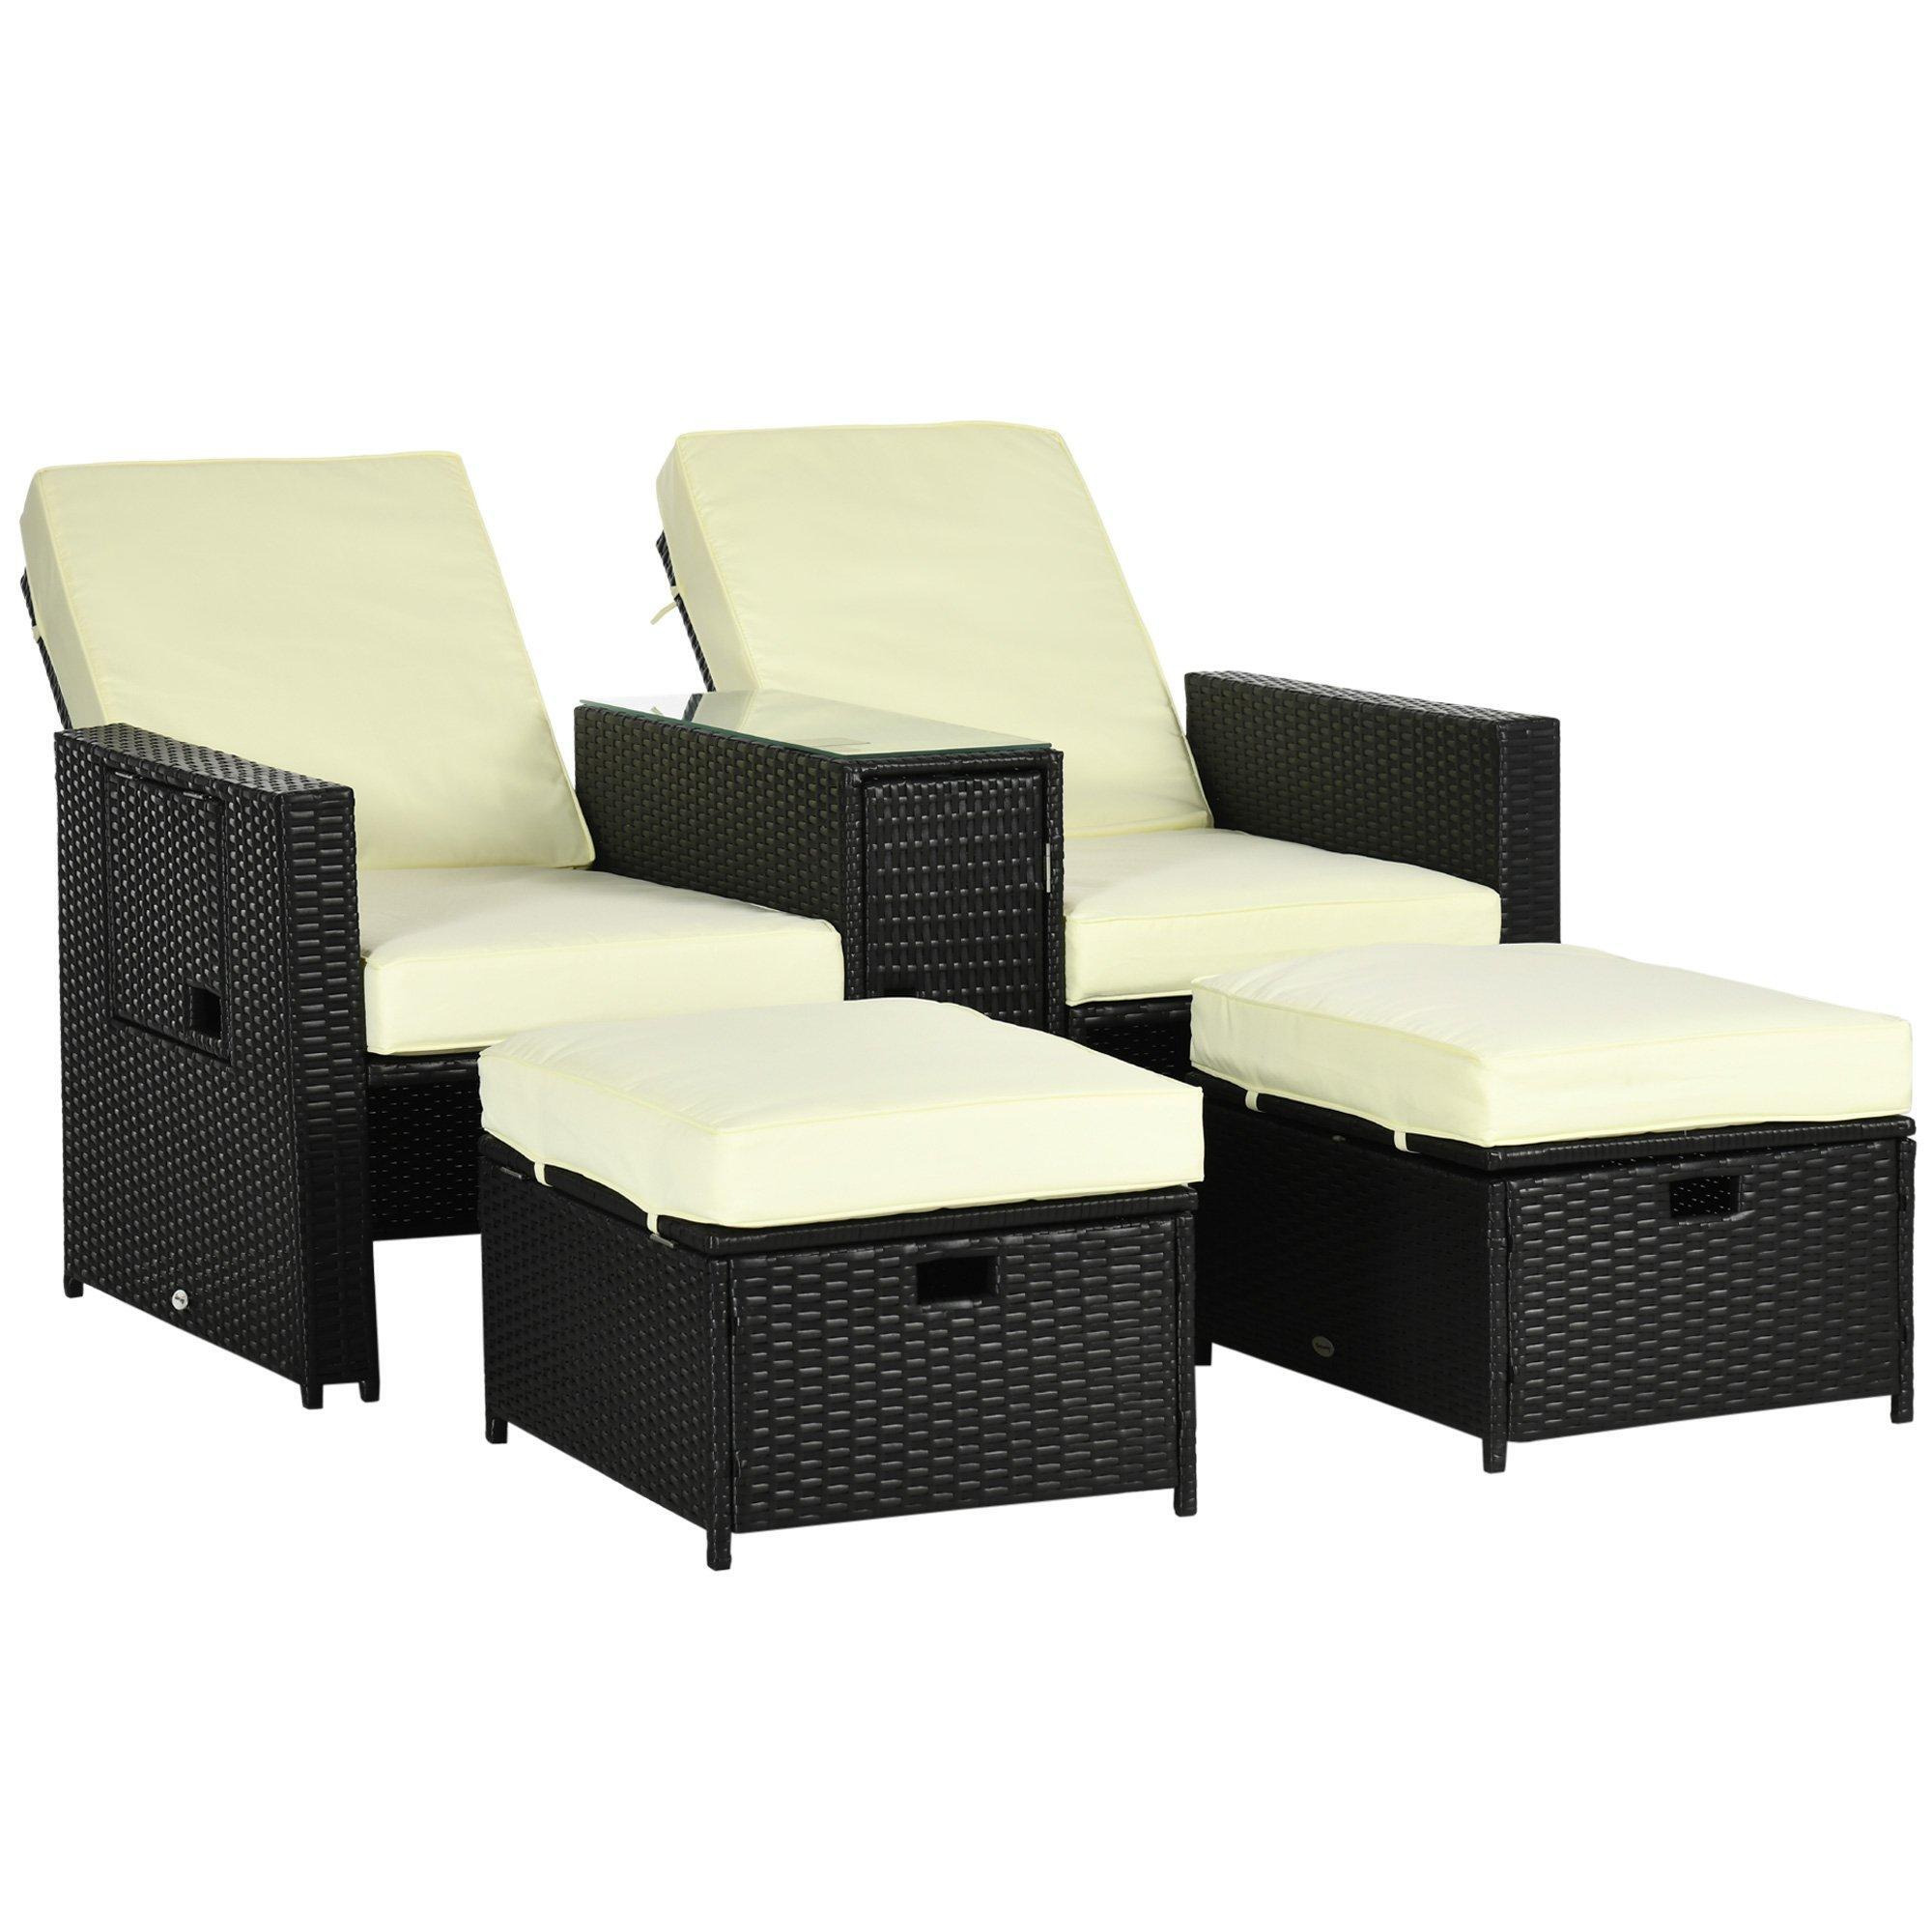 5-level Adjustable Rattan Sun Lounger with Storage Tea Table & Footstools - image 1